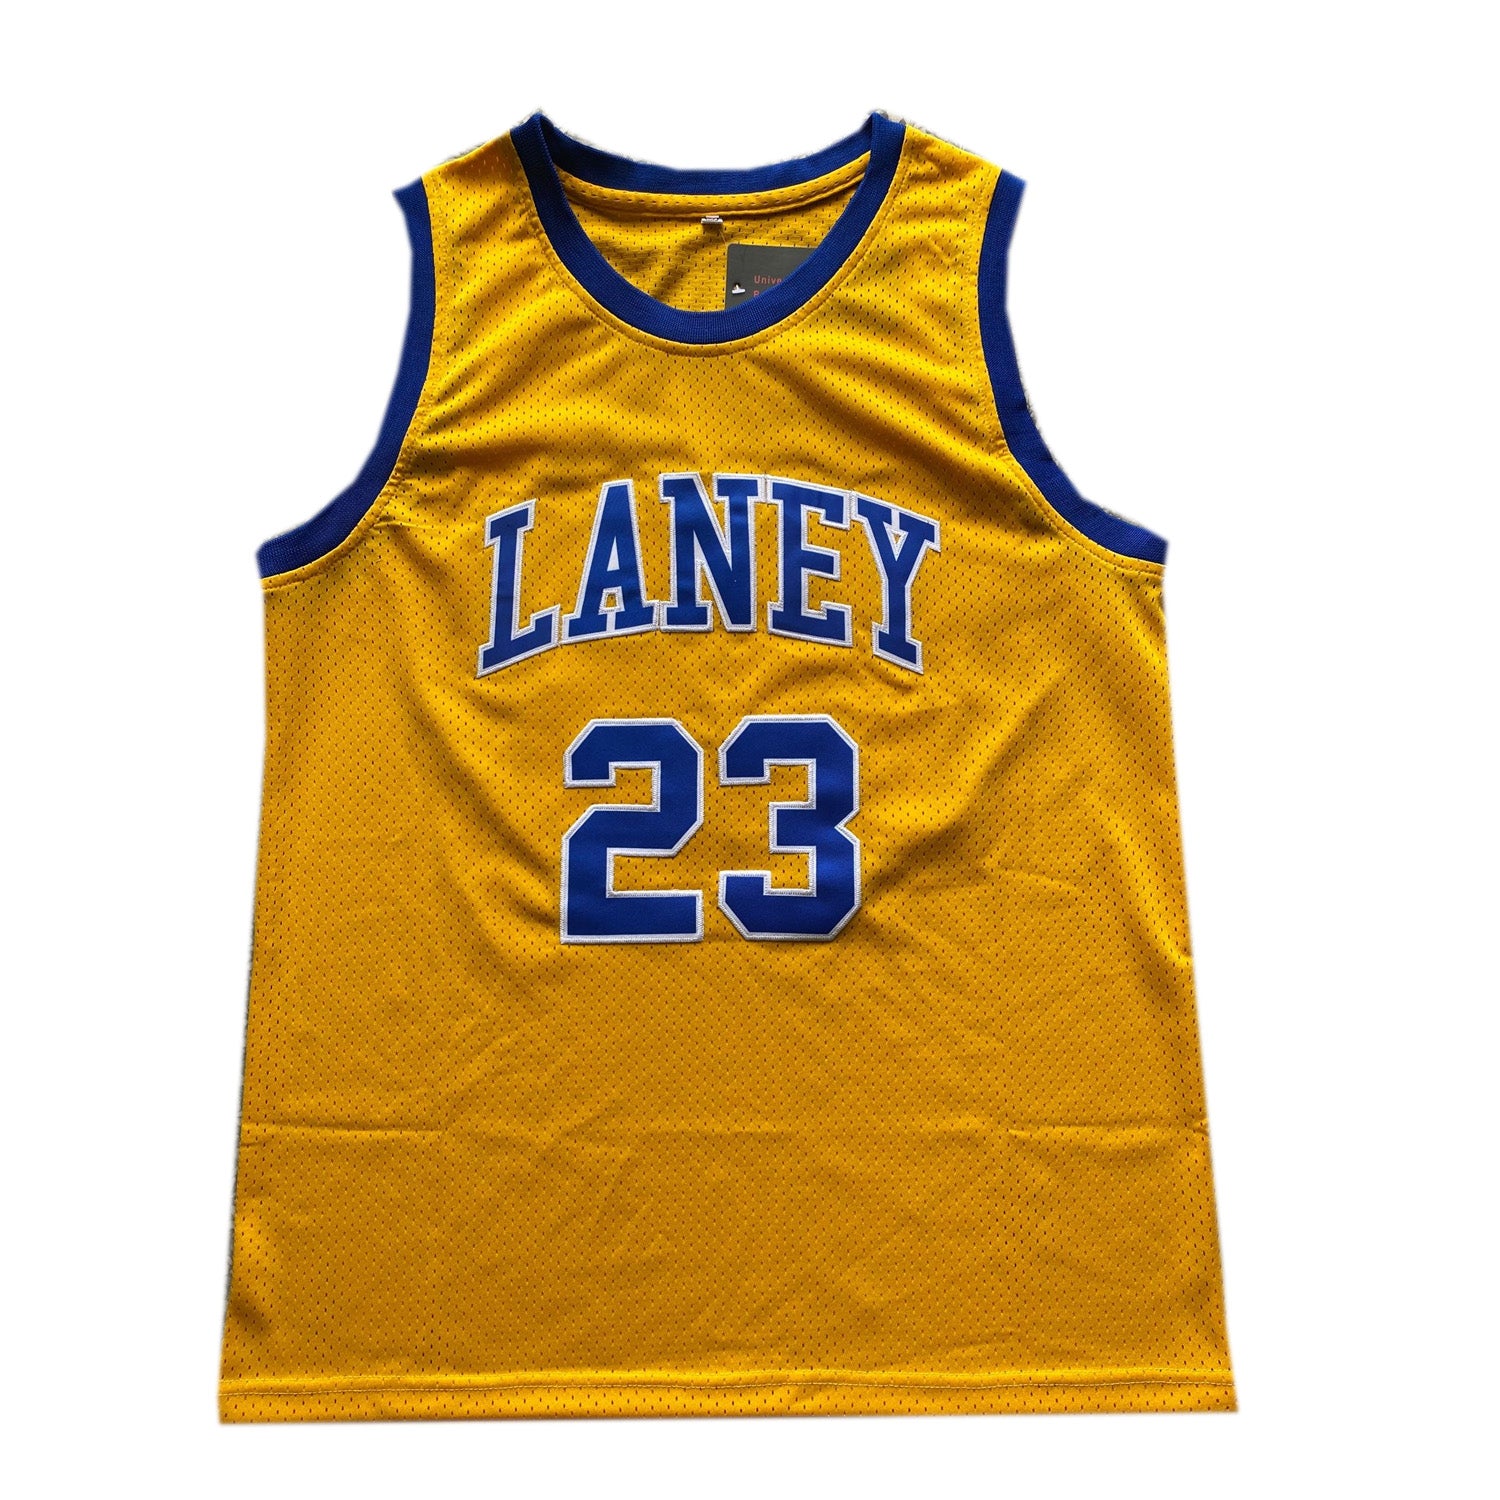 Laney High School Blue #23 Jordan Throwback Basketball Jersey Yellow